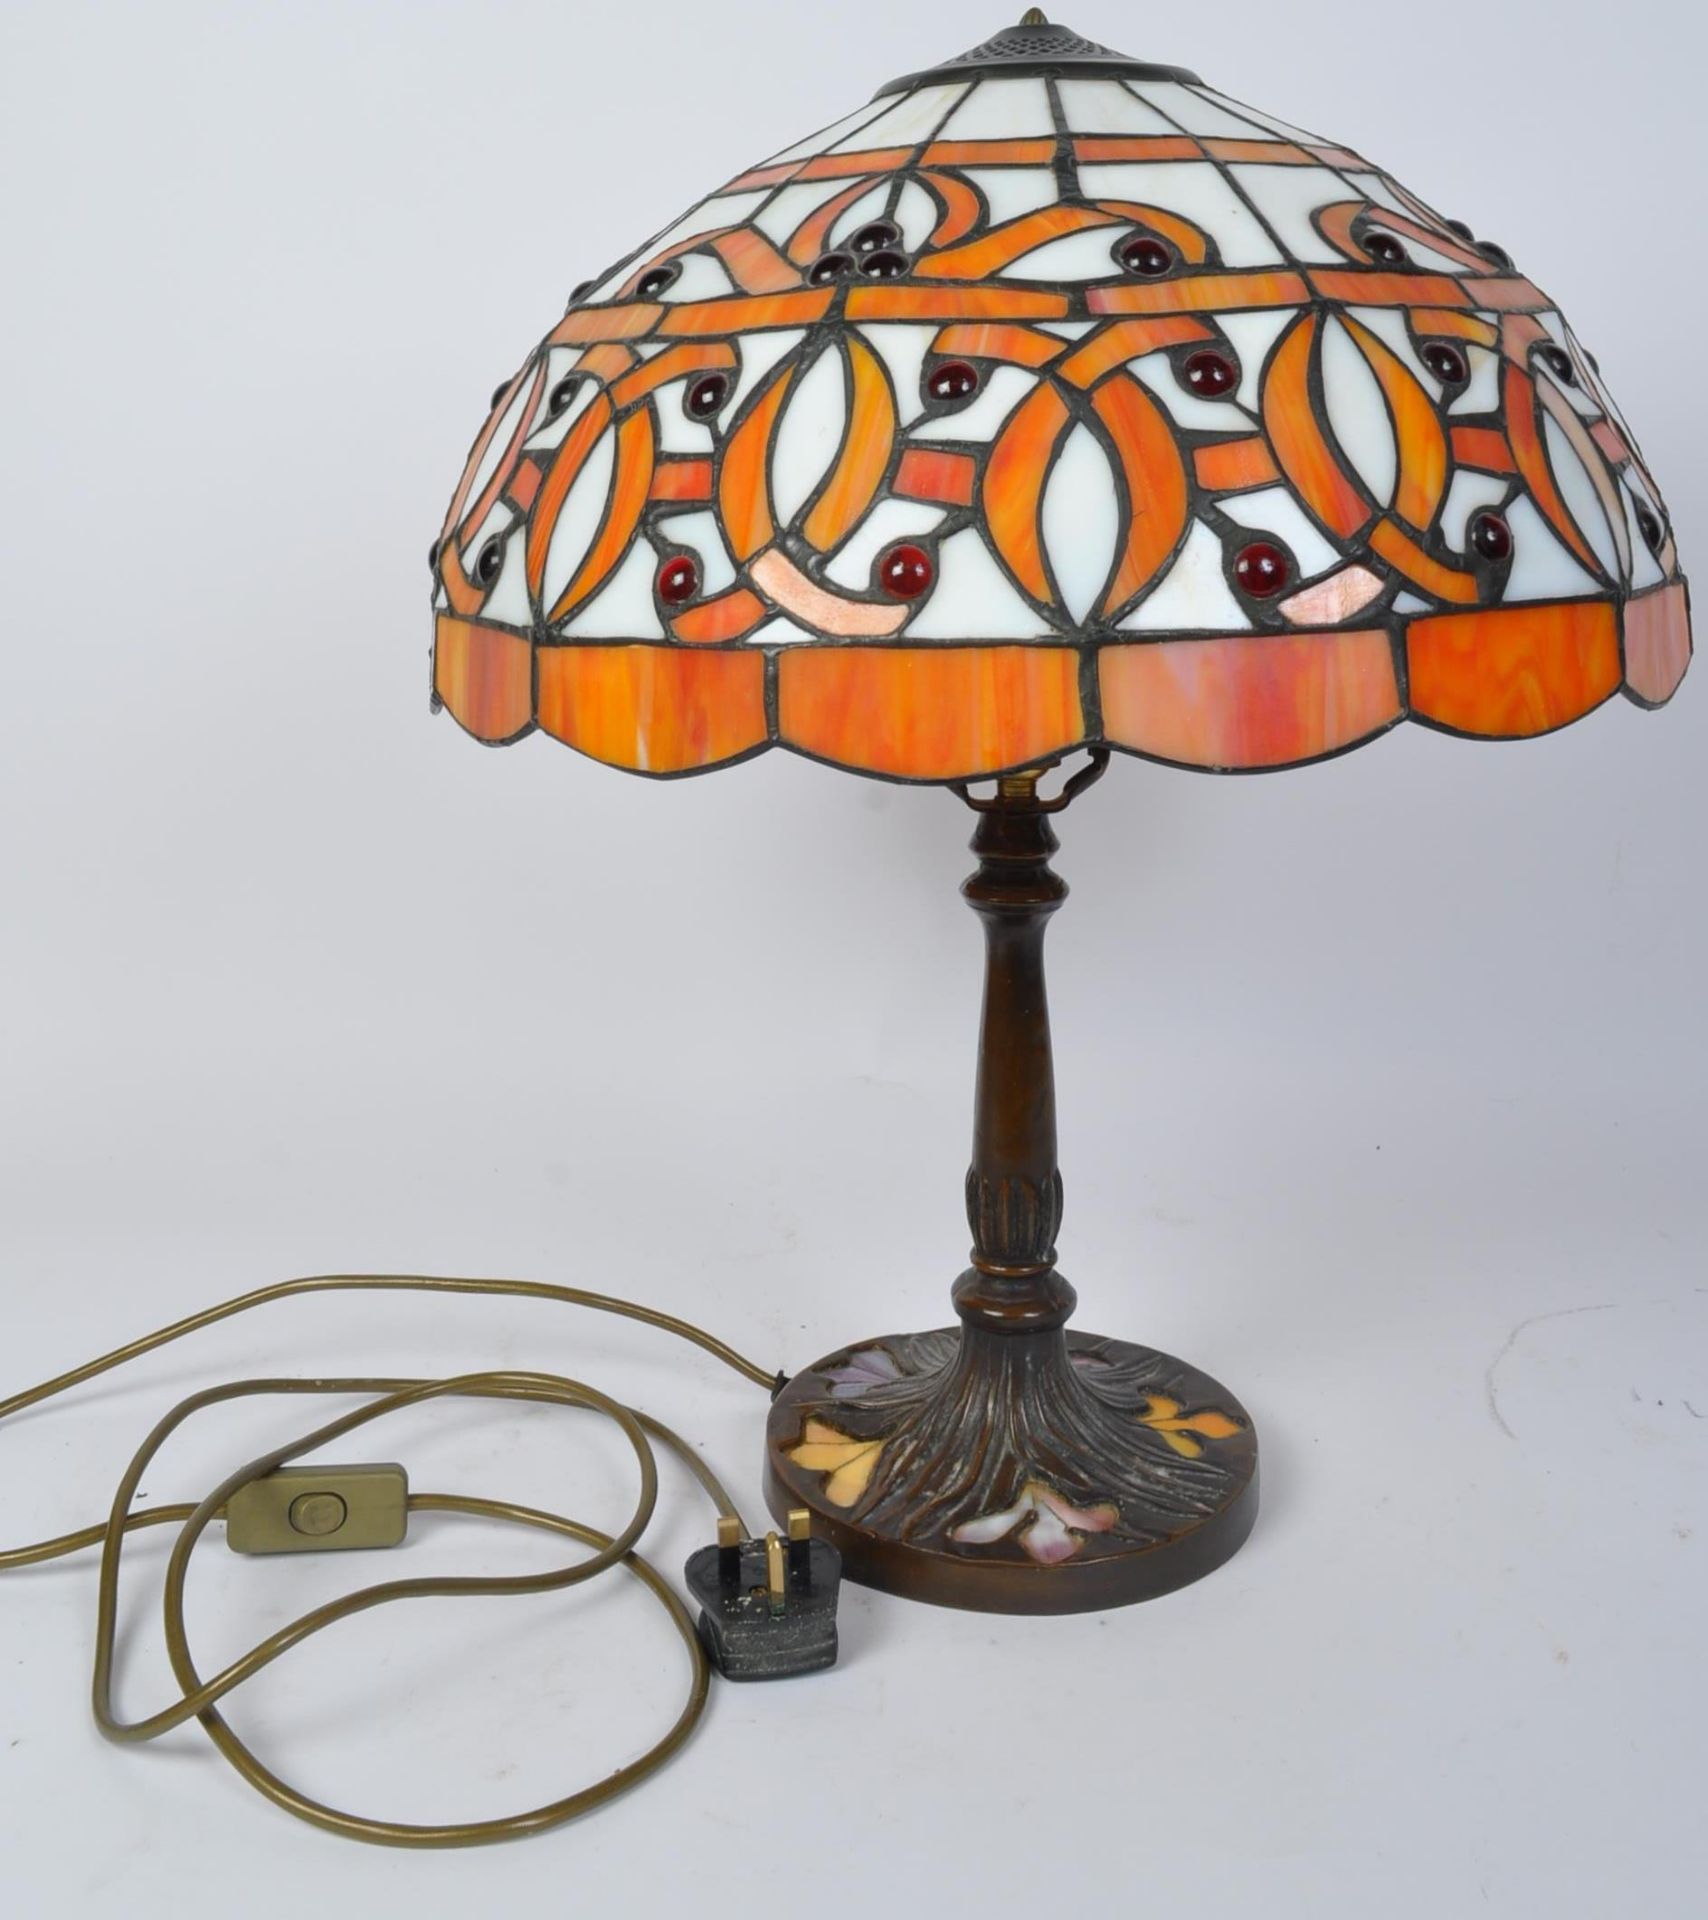 LARGE TIFFANY ART NOUVEAU STYLE TABLE LAMP